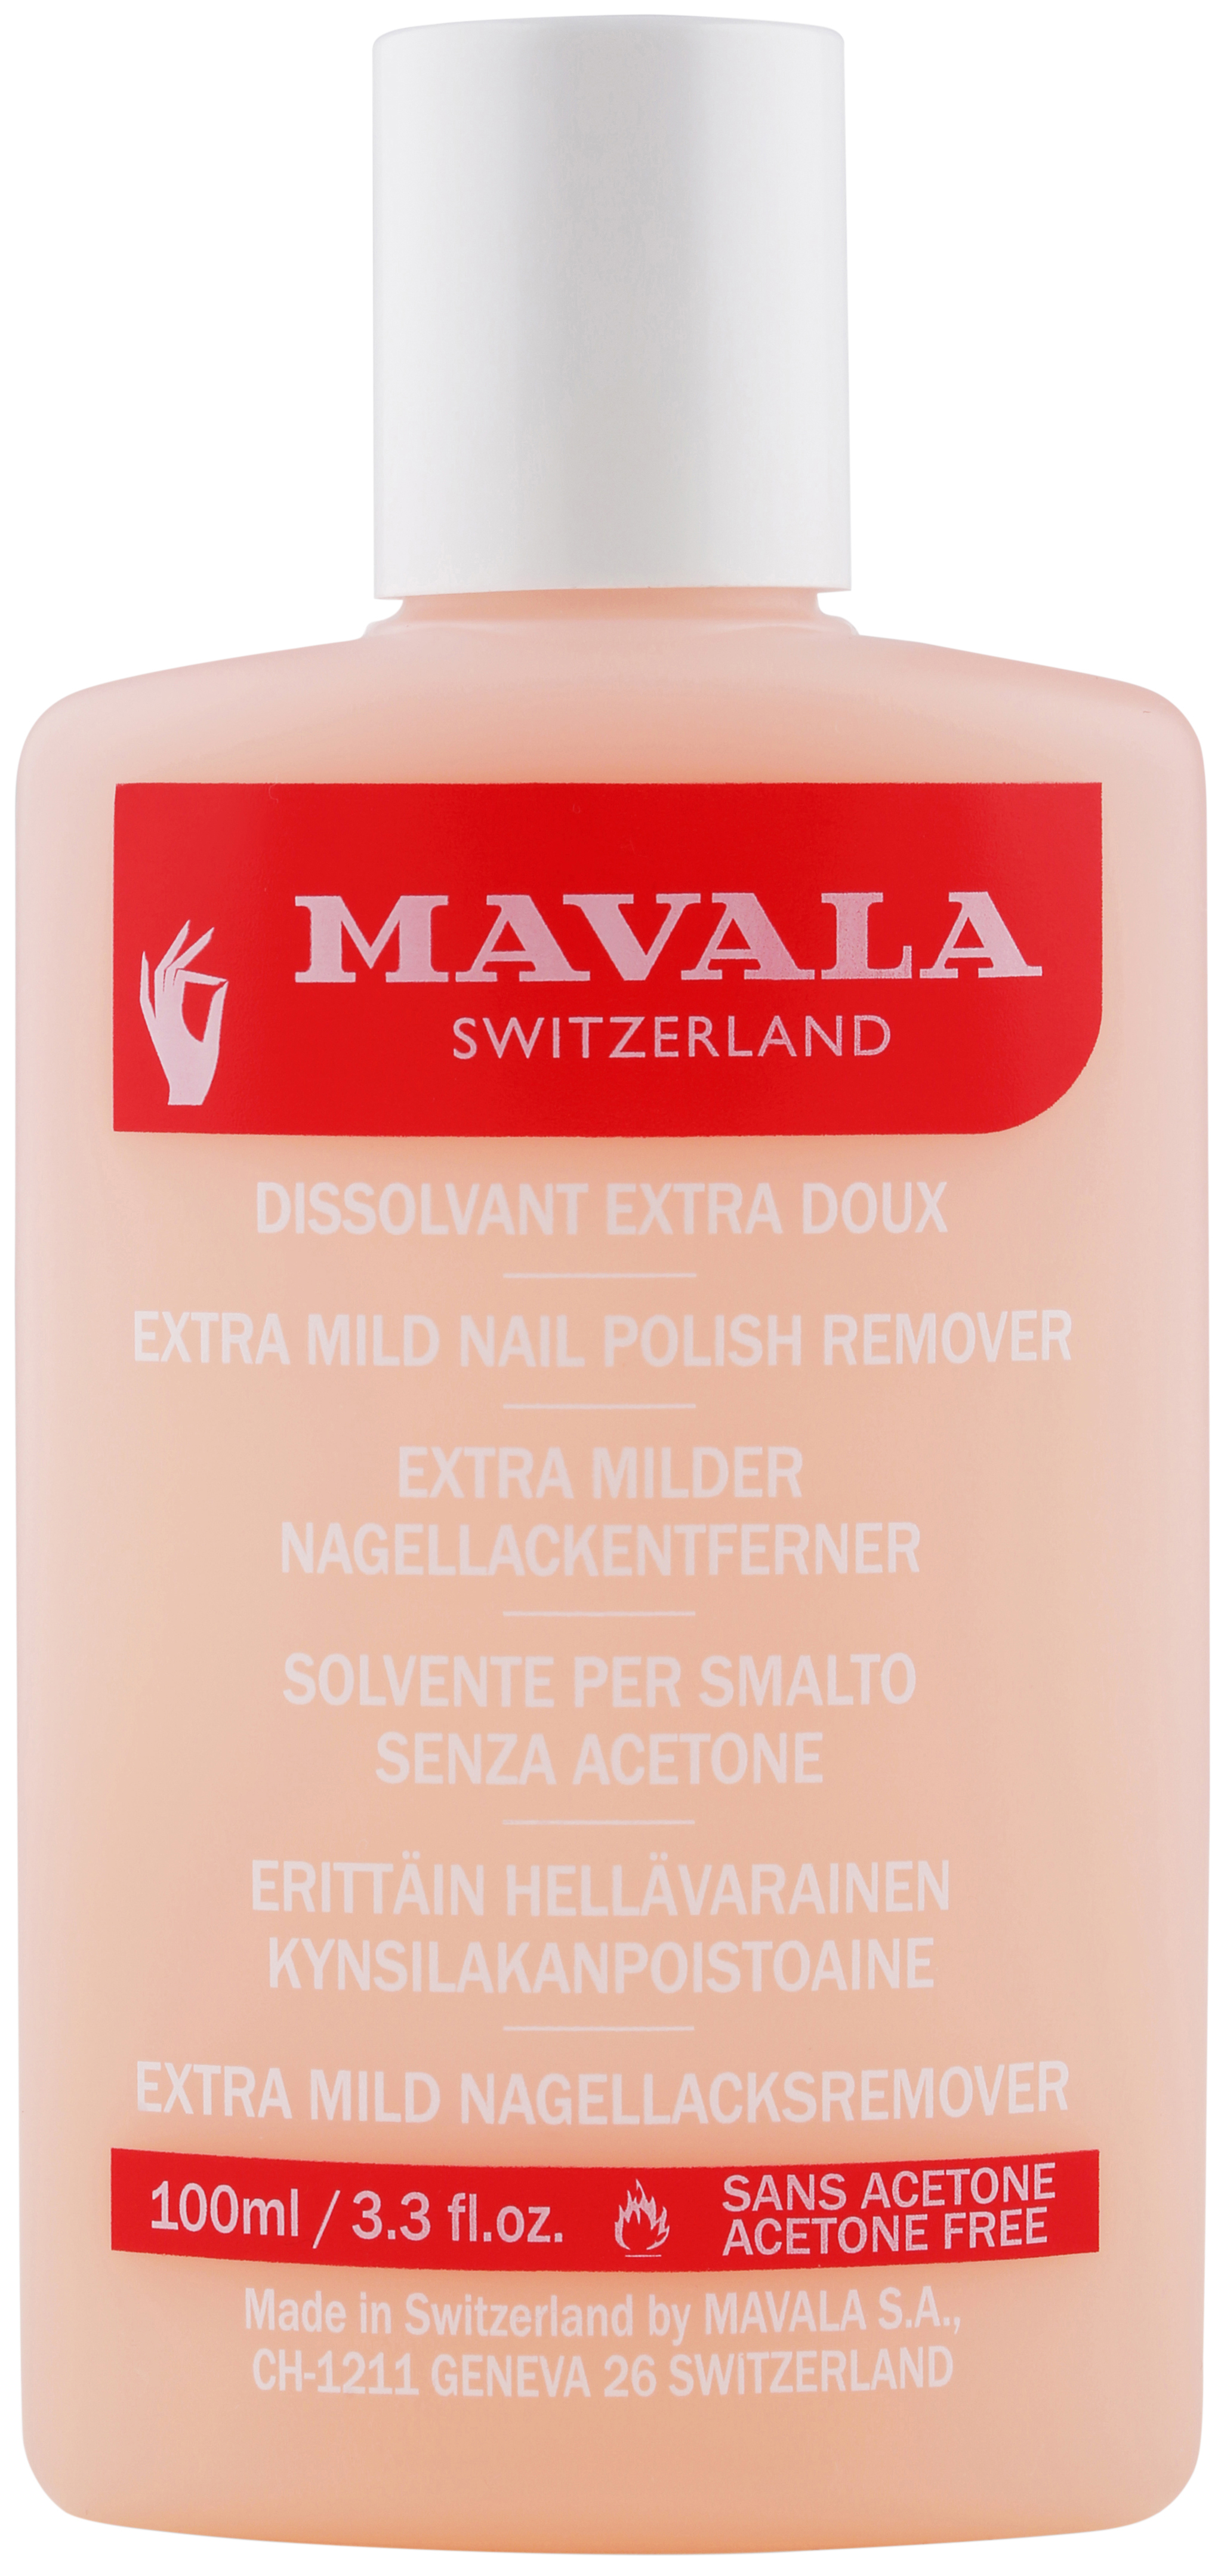 Mavala Extra mild nagellacksremover 100 ml